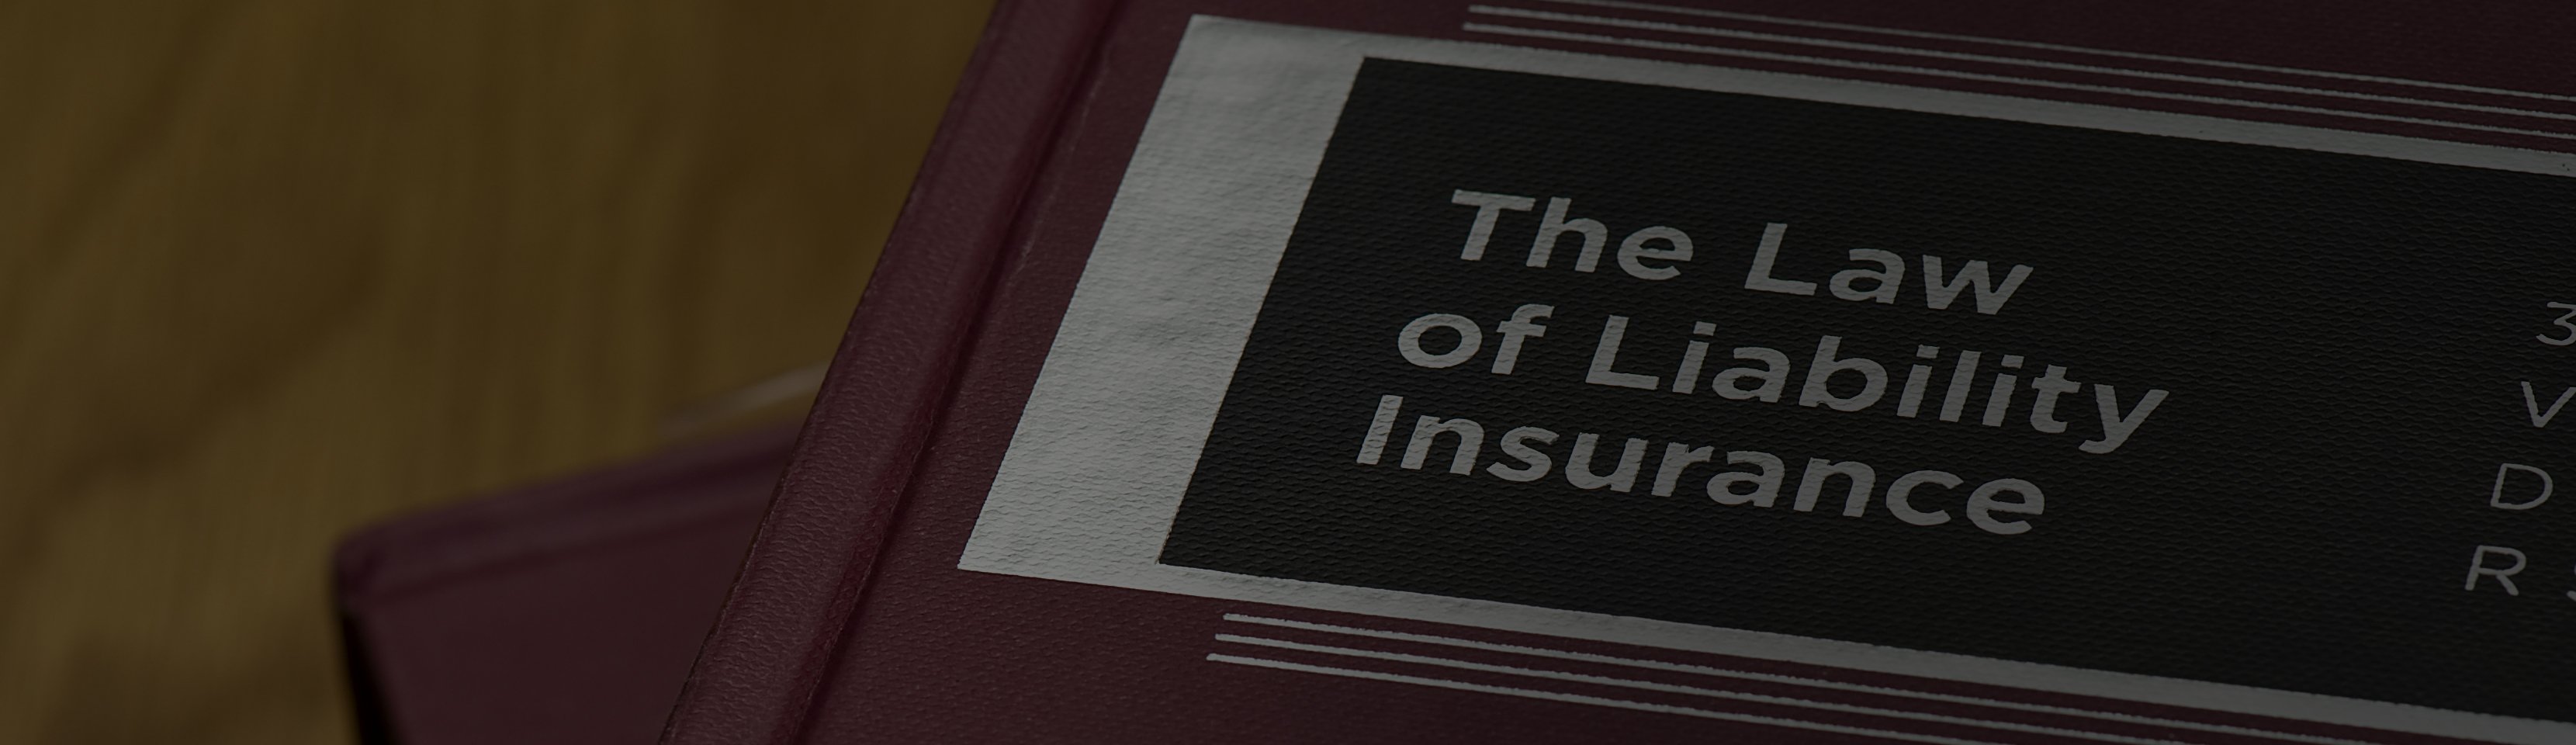 professional liability insurance